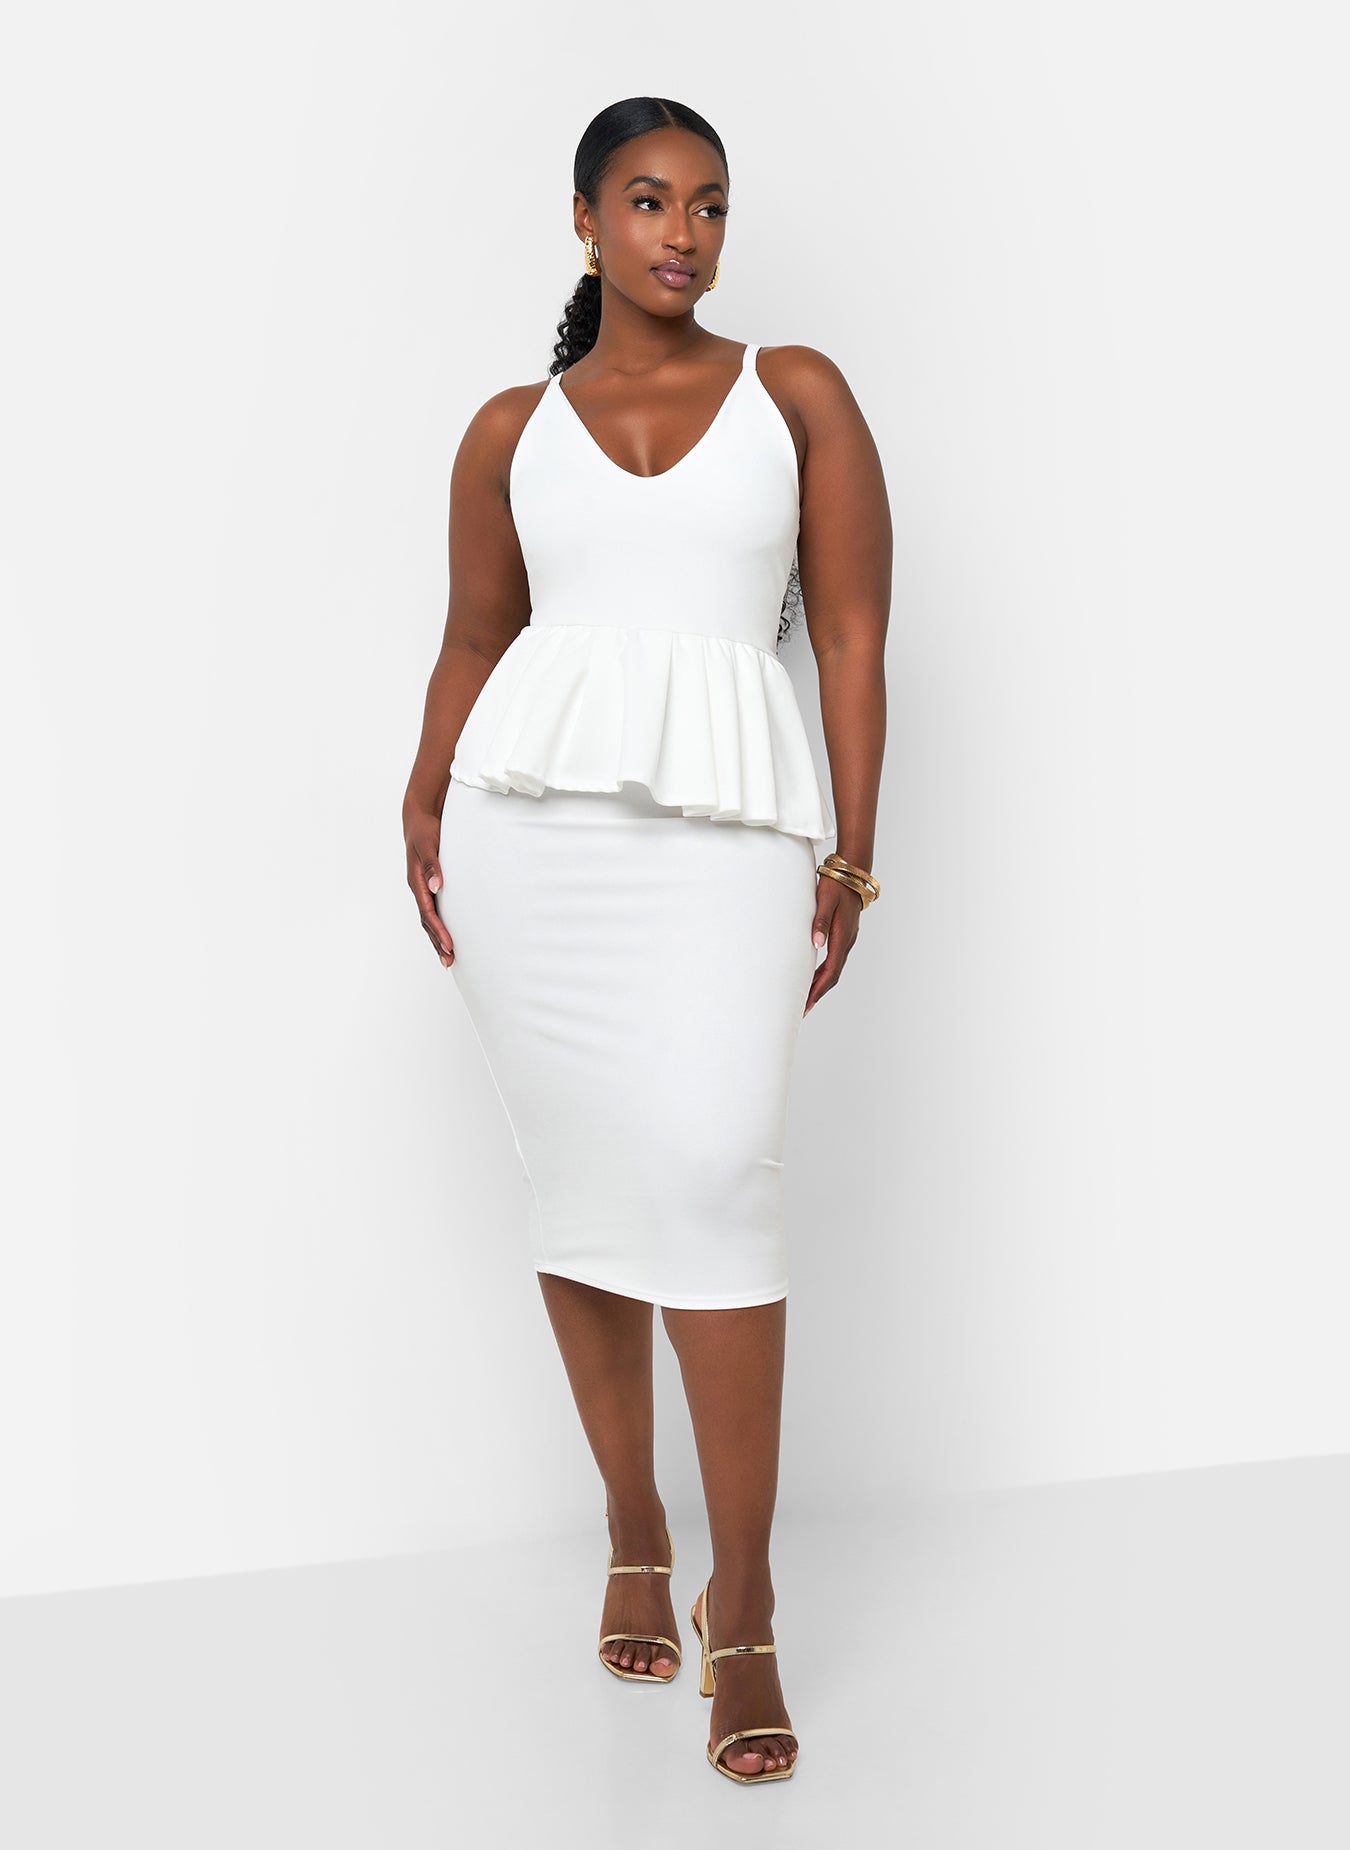 Shop Plus Size White Dresses for Women's - New Arrivals – REBDOLLS